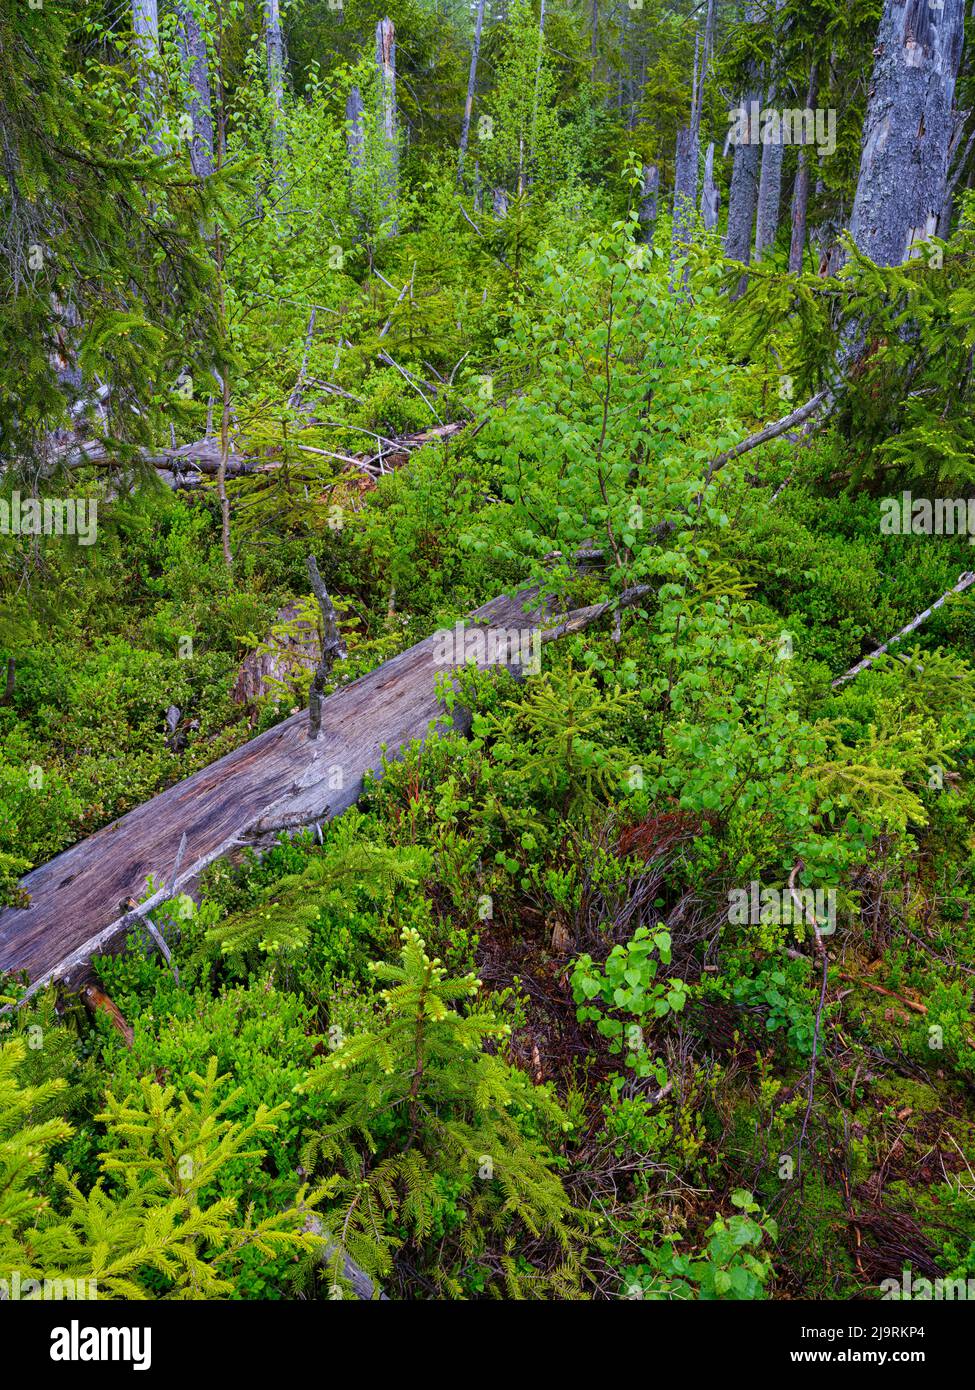 Zones humides de Grosser Filz et Klosterfilz. Forêt de primeval dans le parc national Bavarian Forest près de Sankt Oswald. Europe, Europe centrale, Allemagne, Bavari Banque D'Images